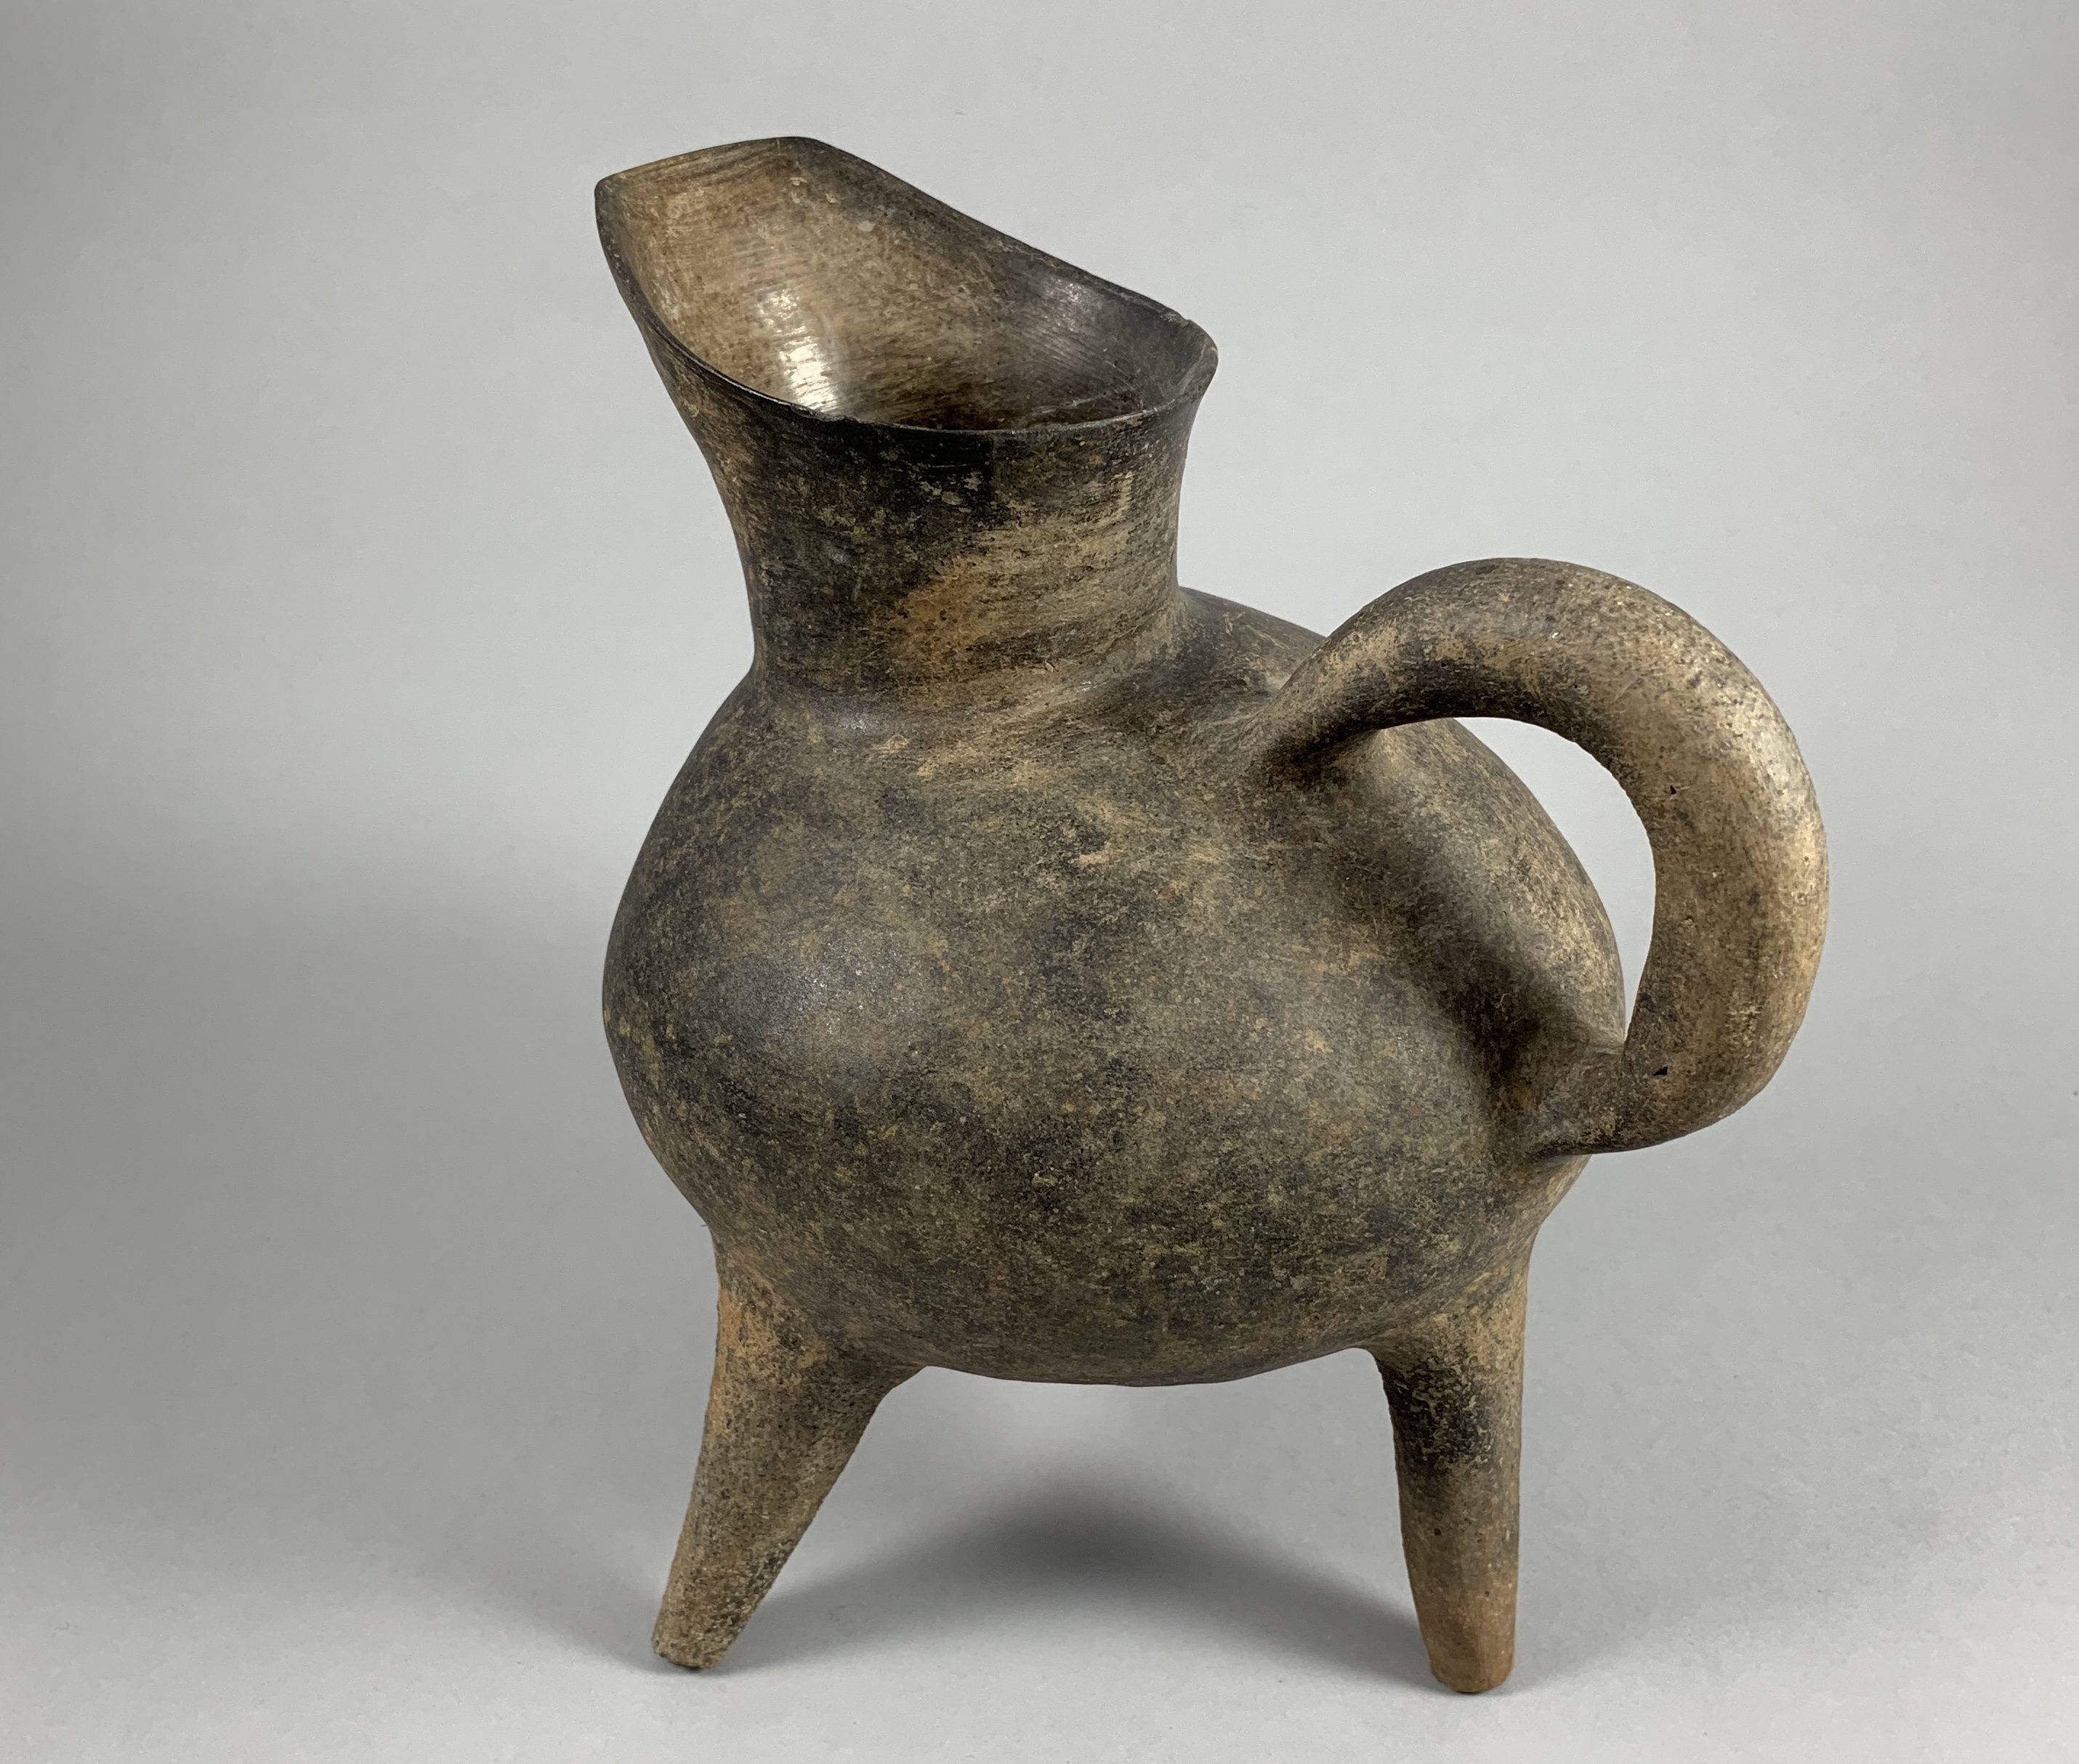 A Tripod Pottery Vessel, Liangzhu Culture (3300-2200 Bc) - Image 8 of 15